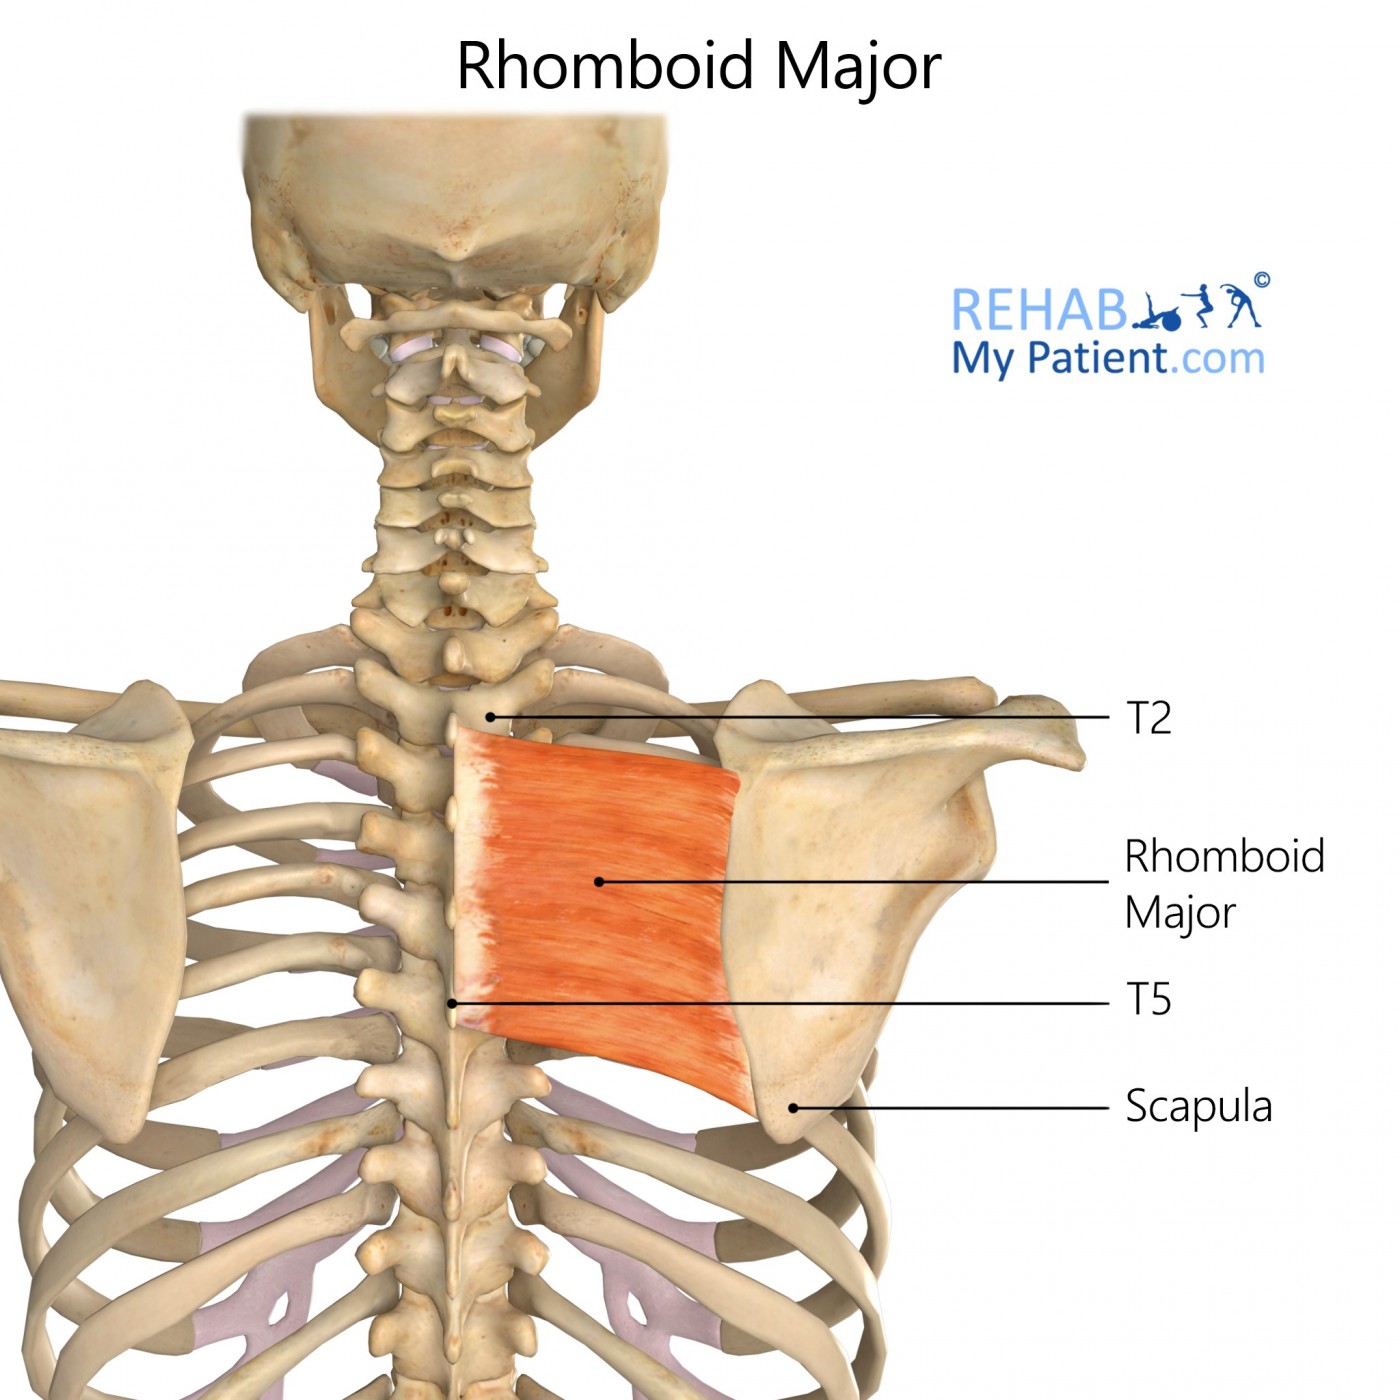 Rhomboid Major | Rehab My Patient